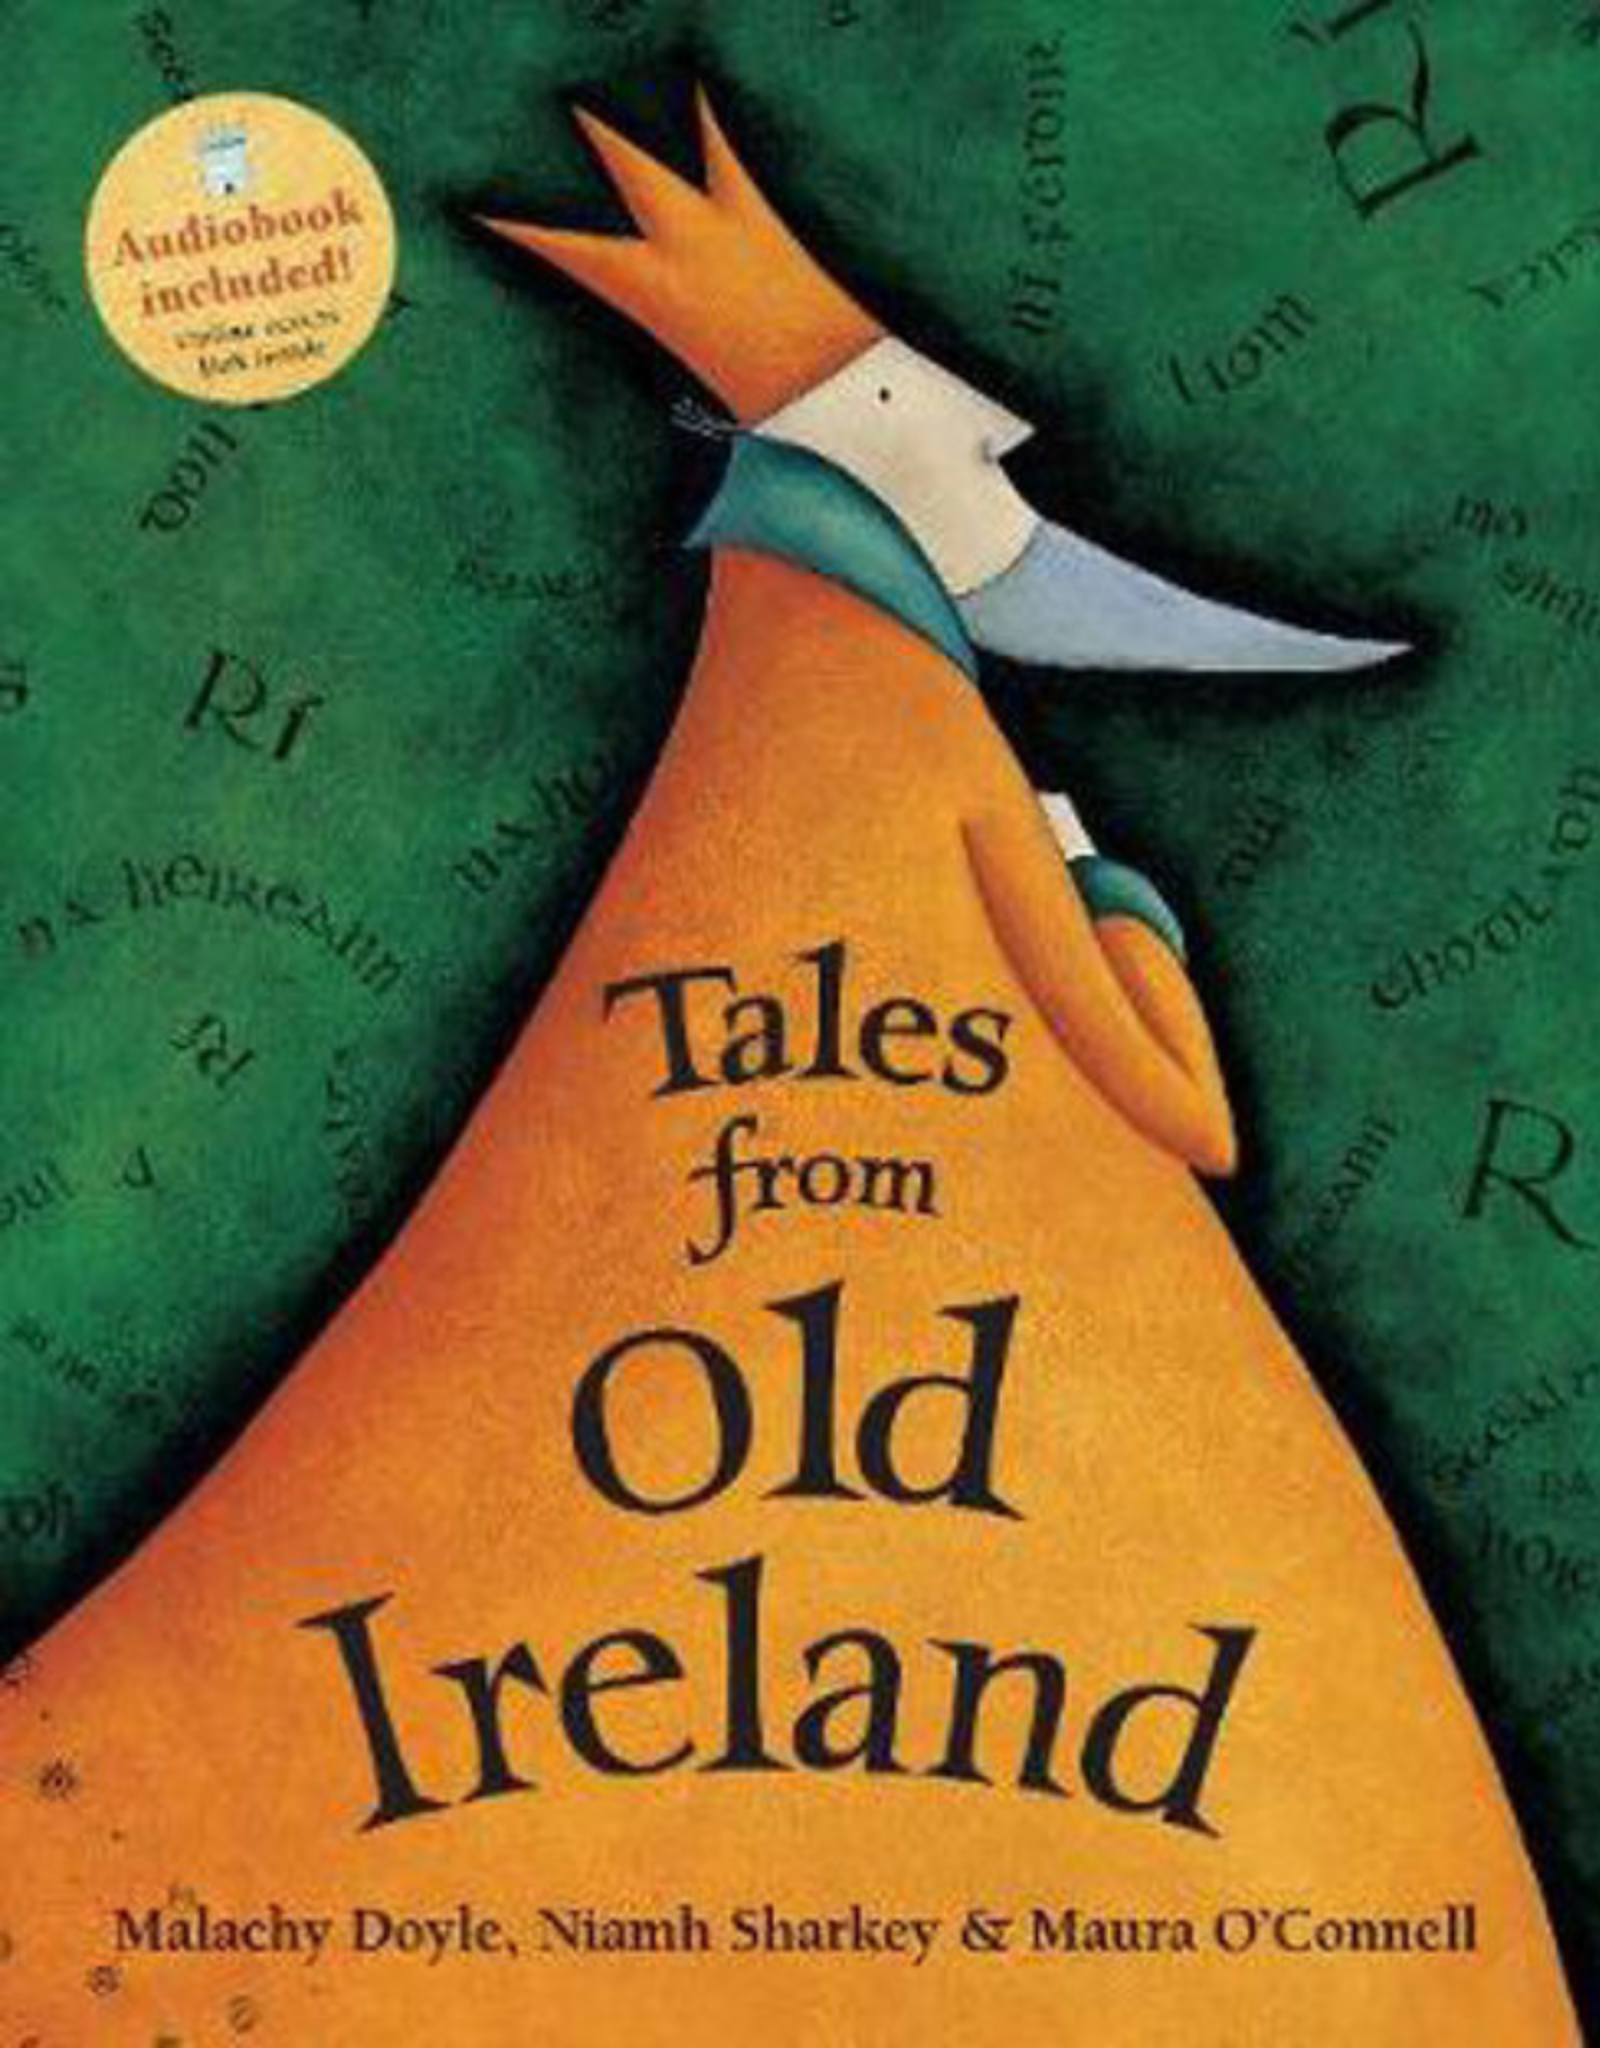 Tales From Old Ireland - Malachy Doyle, Niamh Sharkey & Maura O'Connell